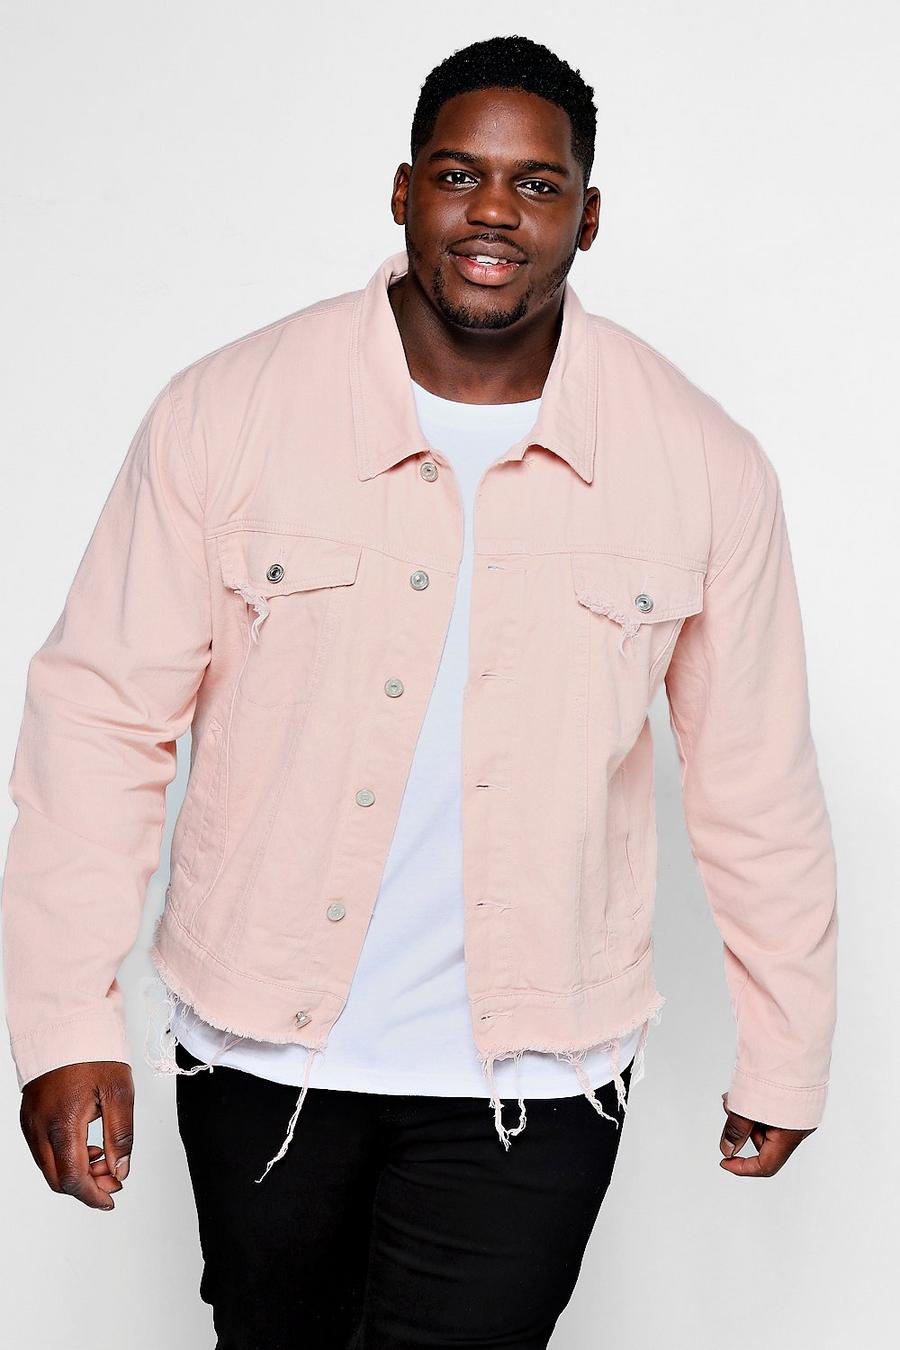 Shirt Style Collar Pink Denim Jacket for Mens - Danezon